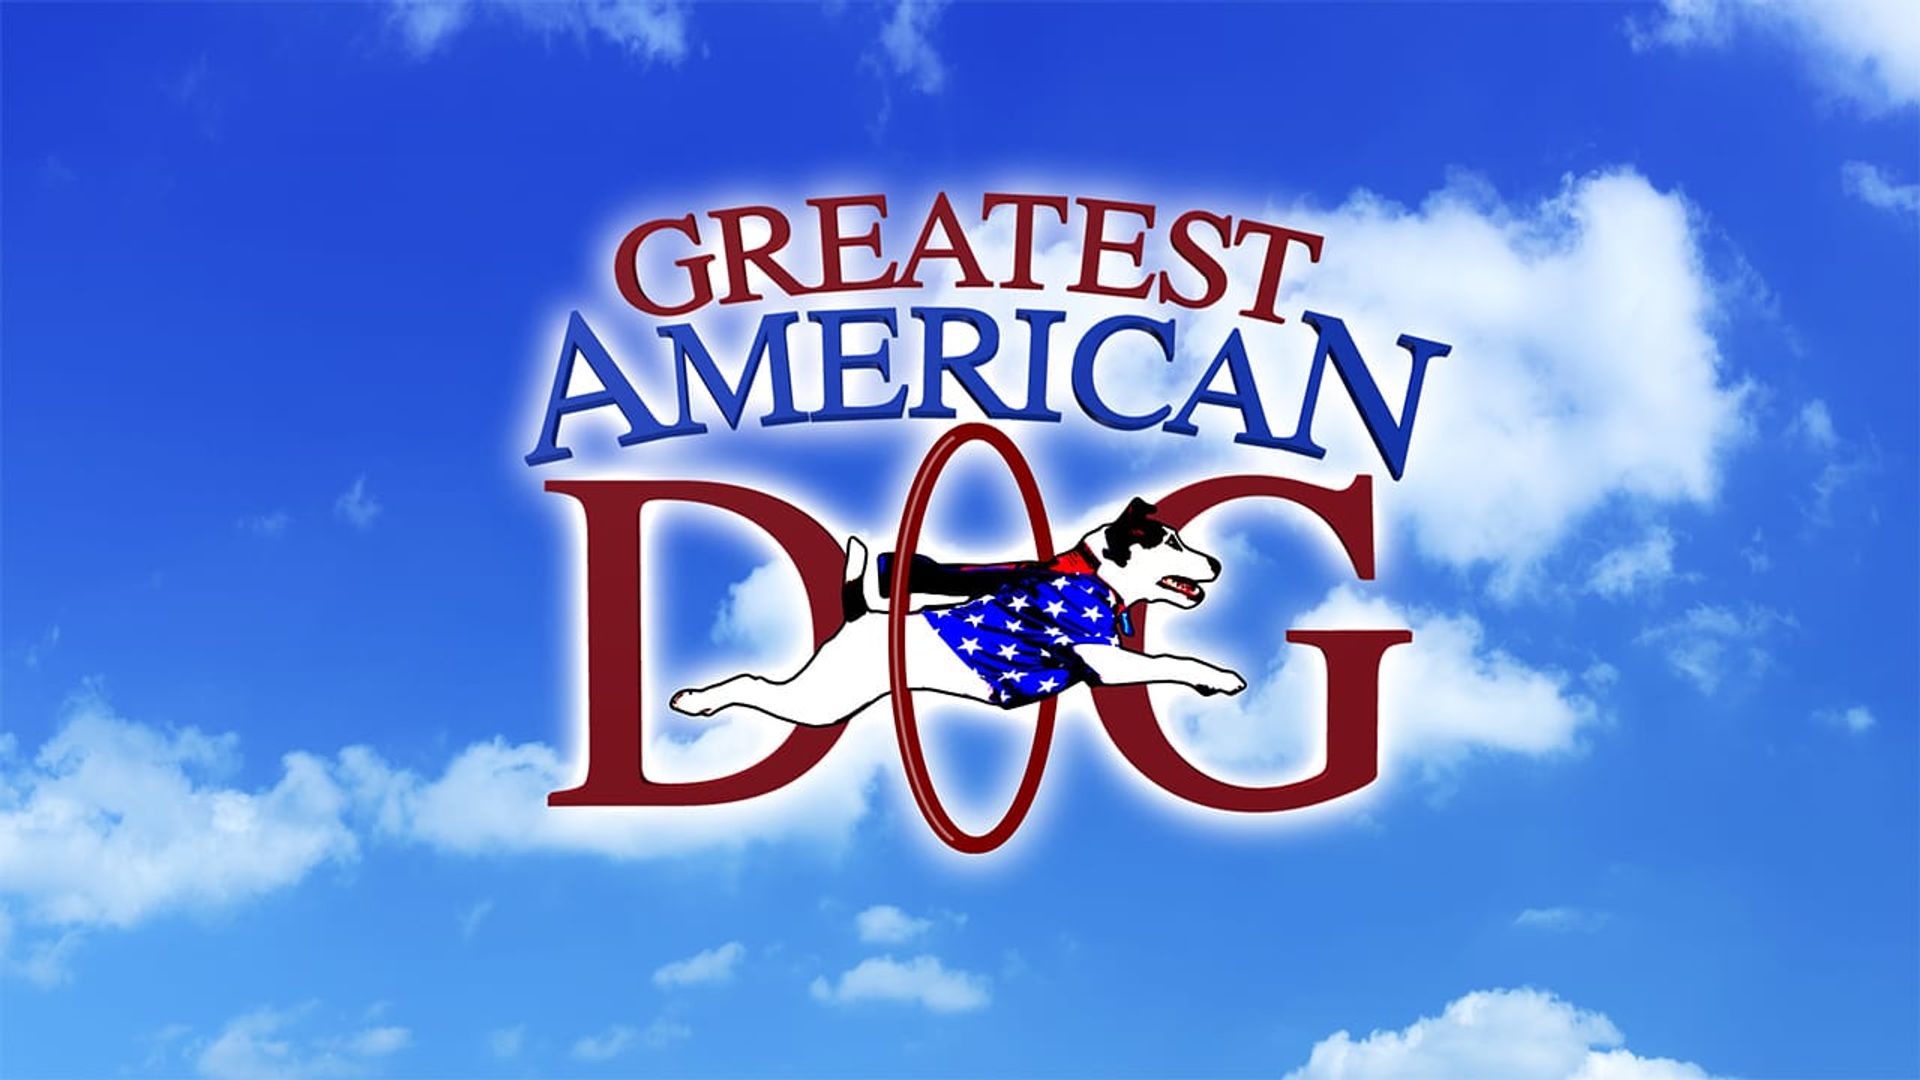 Greatest American Dog background